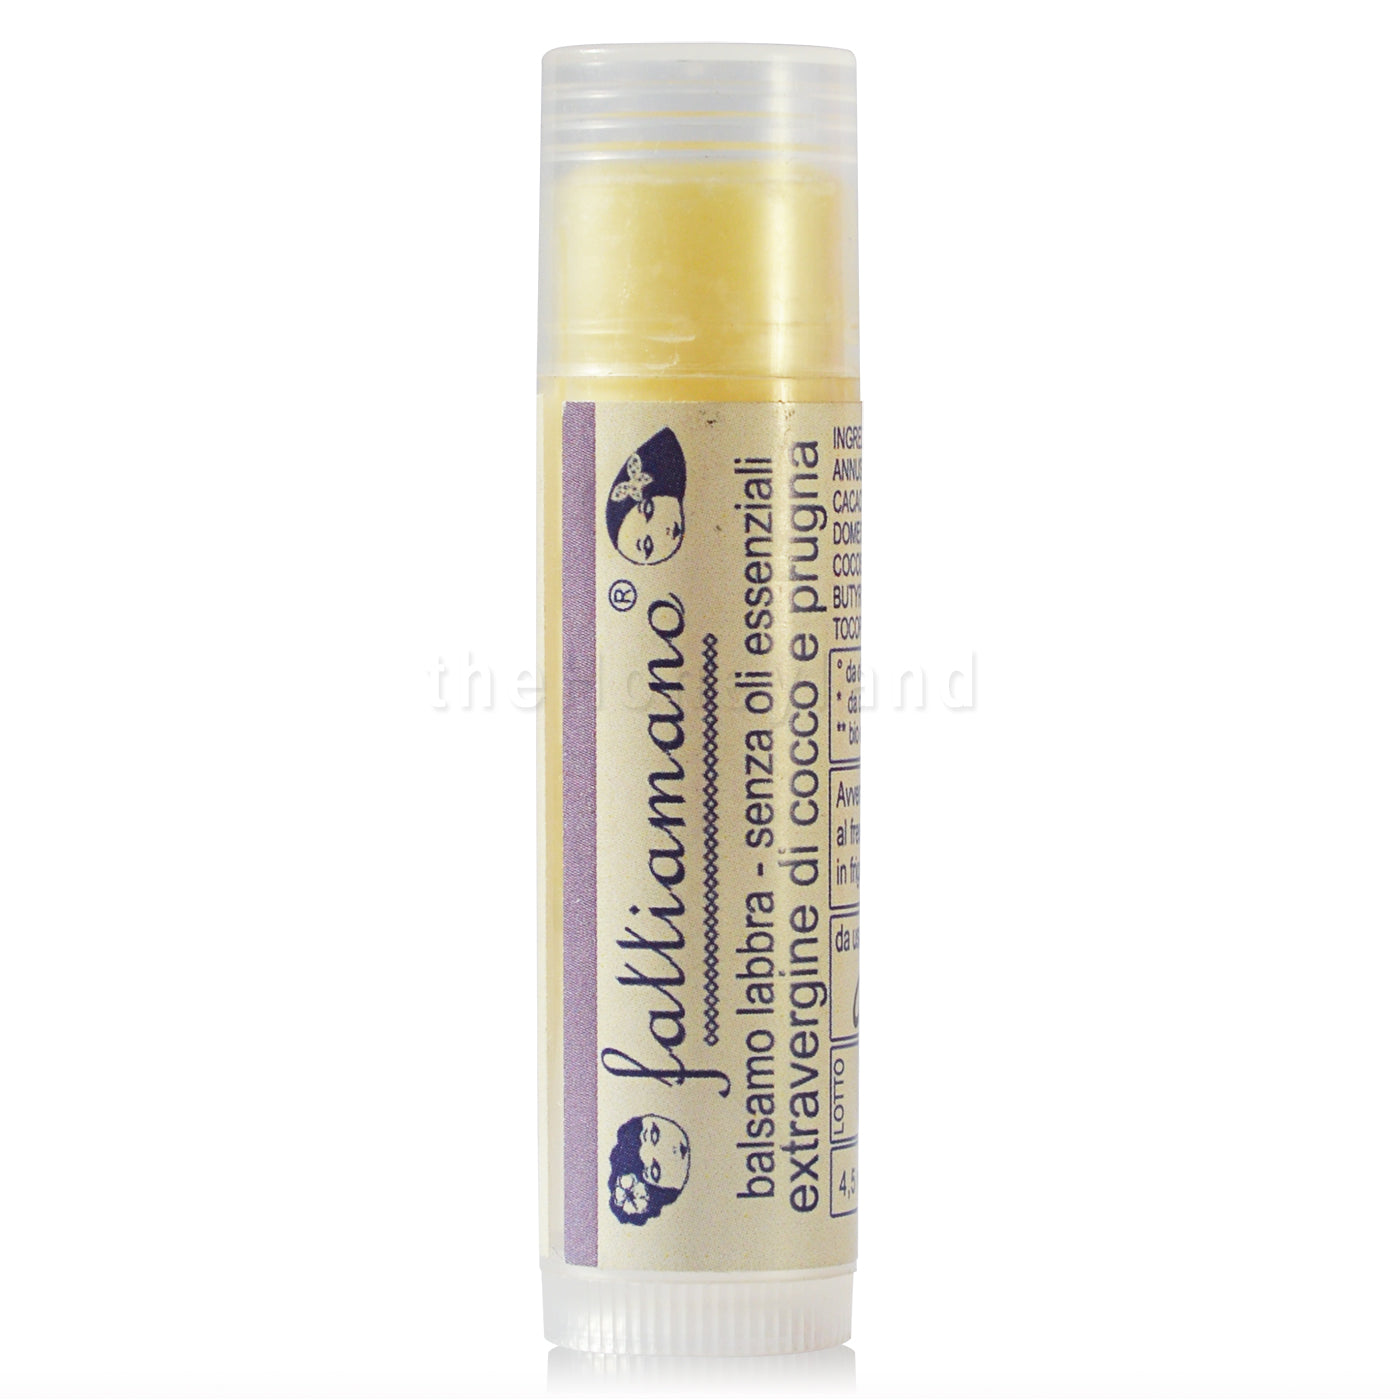 Fragrance free lip balm with organic beeswax